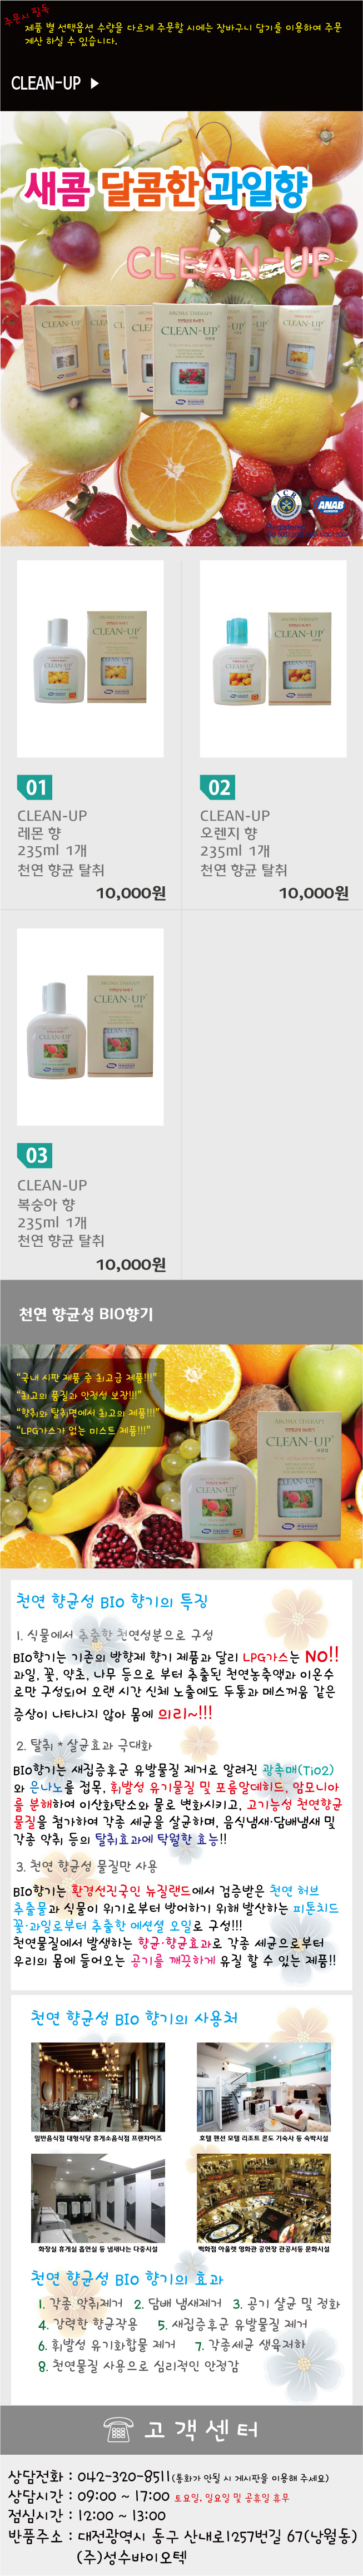 clean-up_fruits_1.jpg